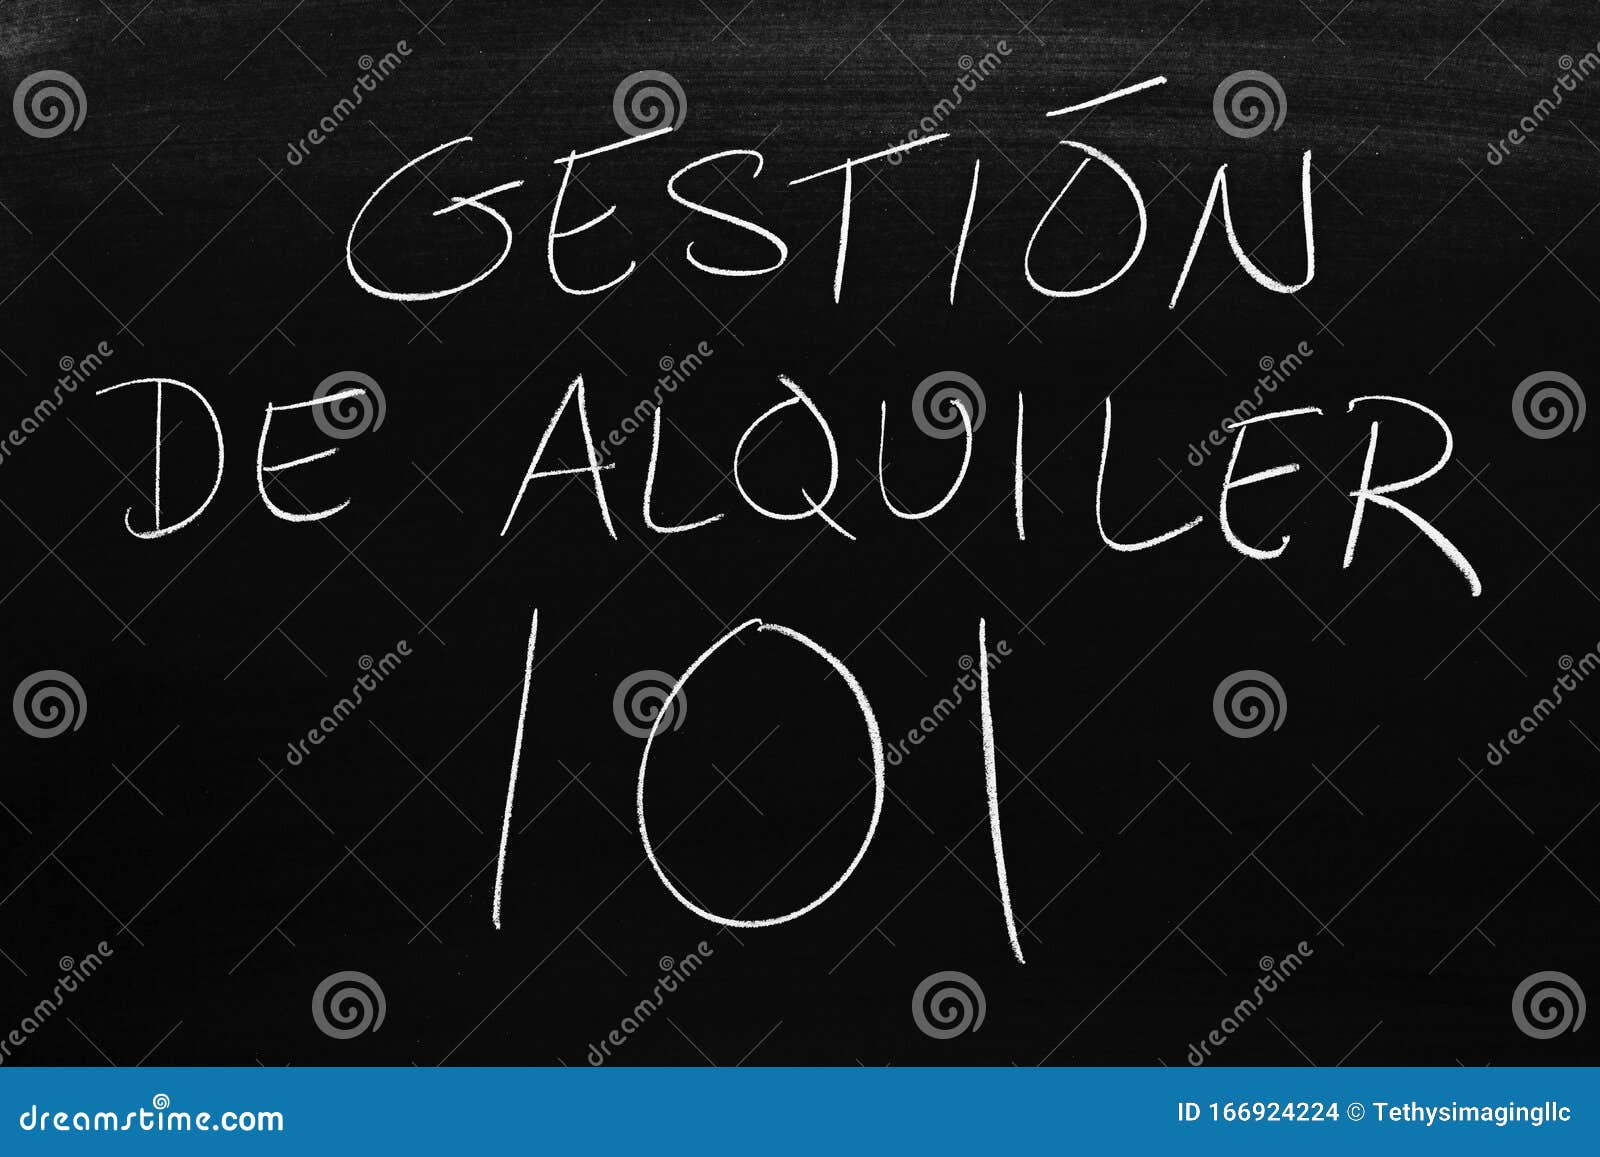 gestiÃÂ³n de alquiler 101 on a blackboard.  translation: rental management 101